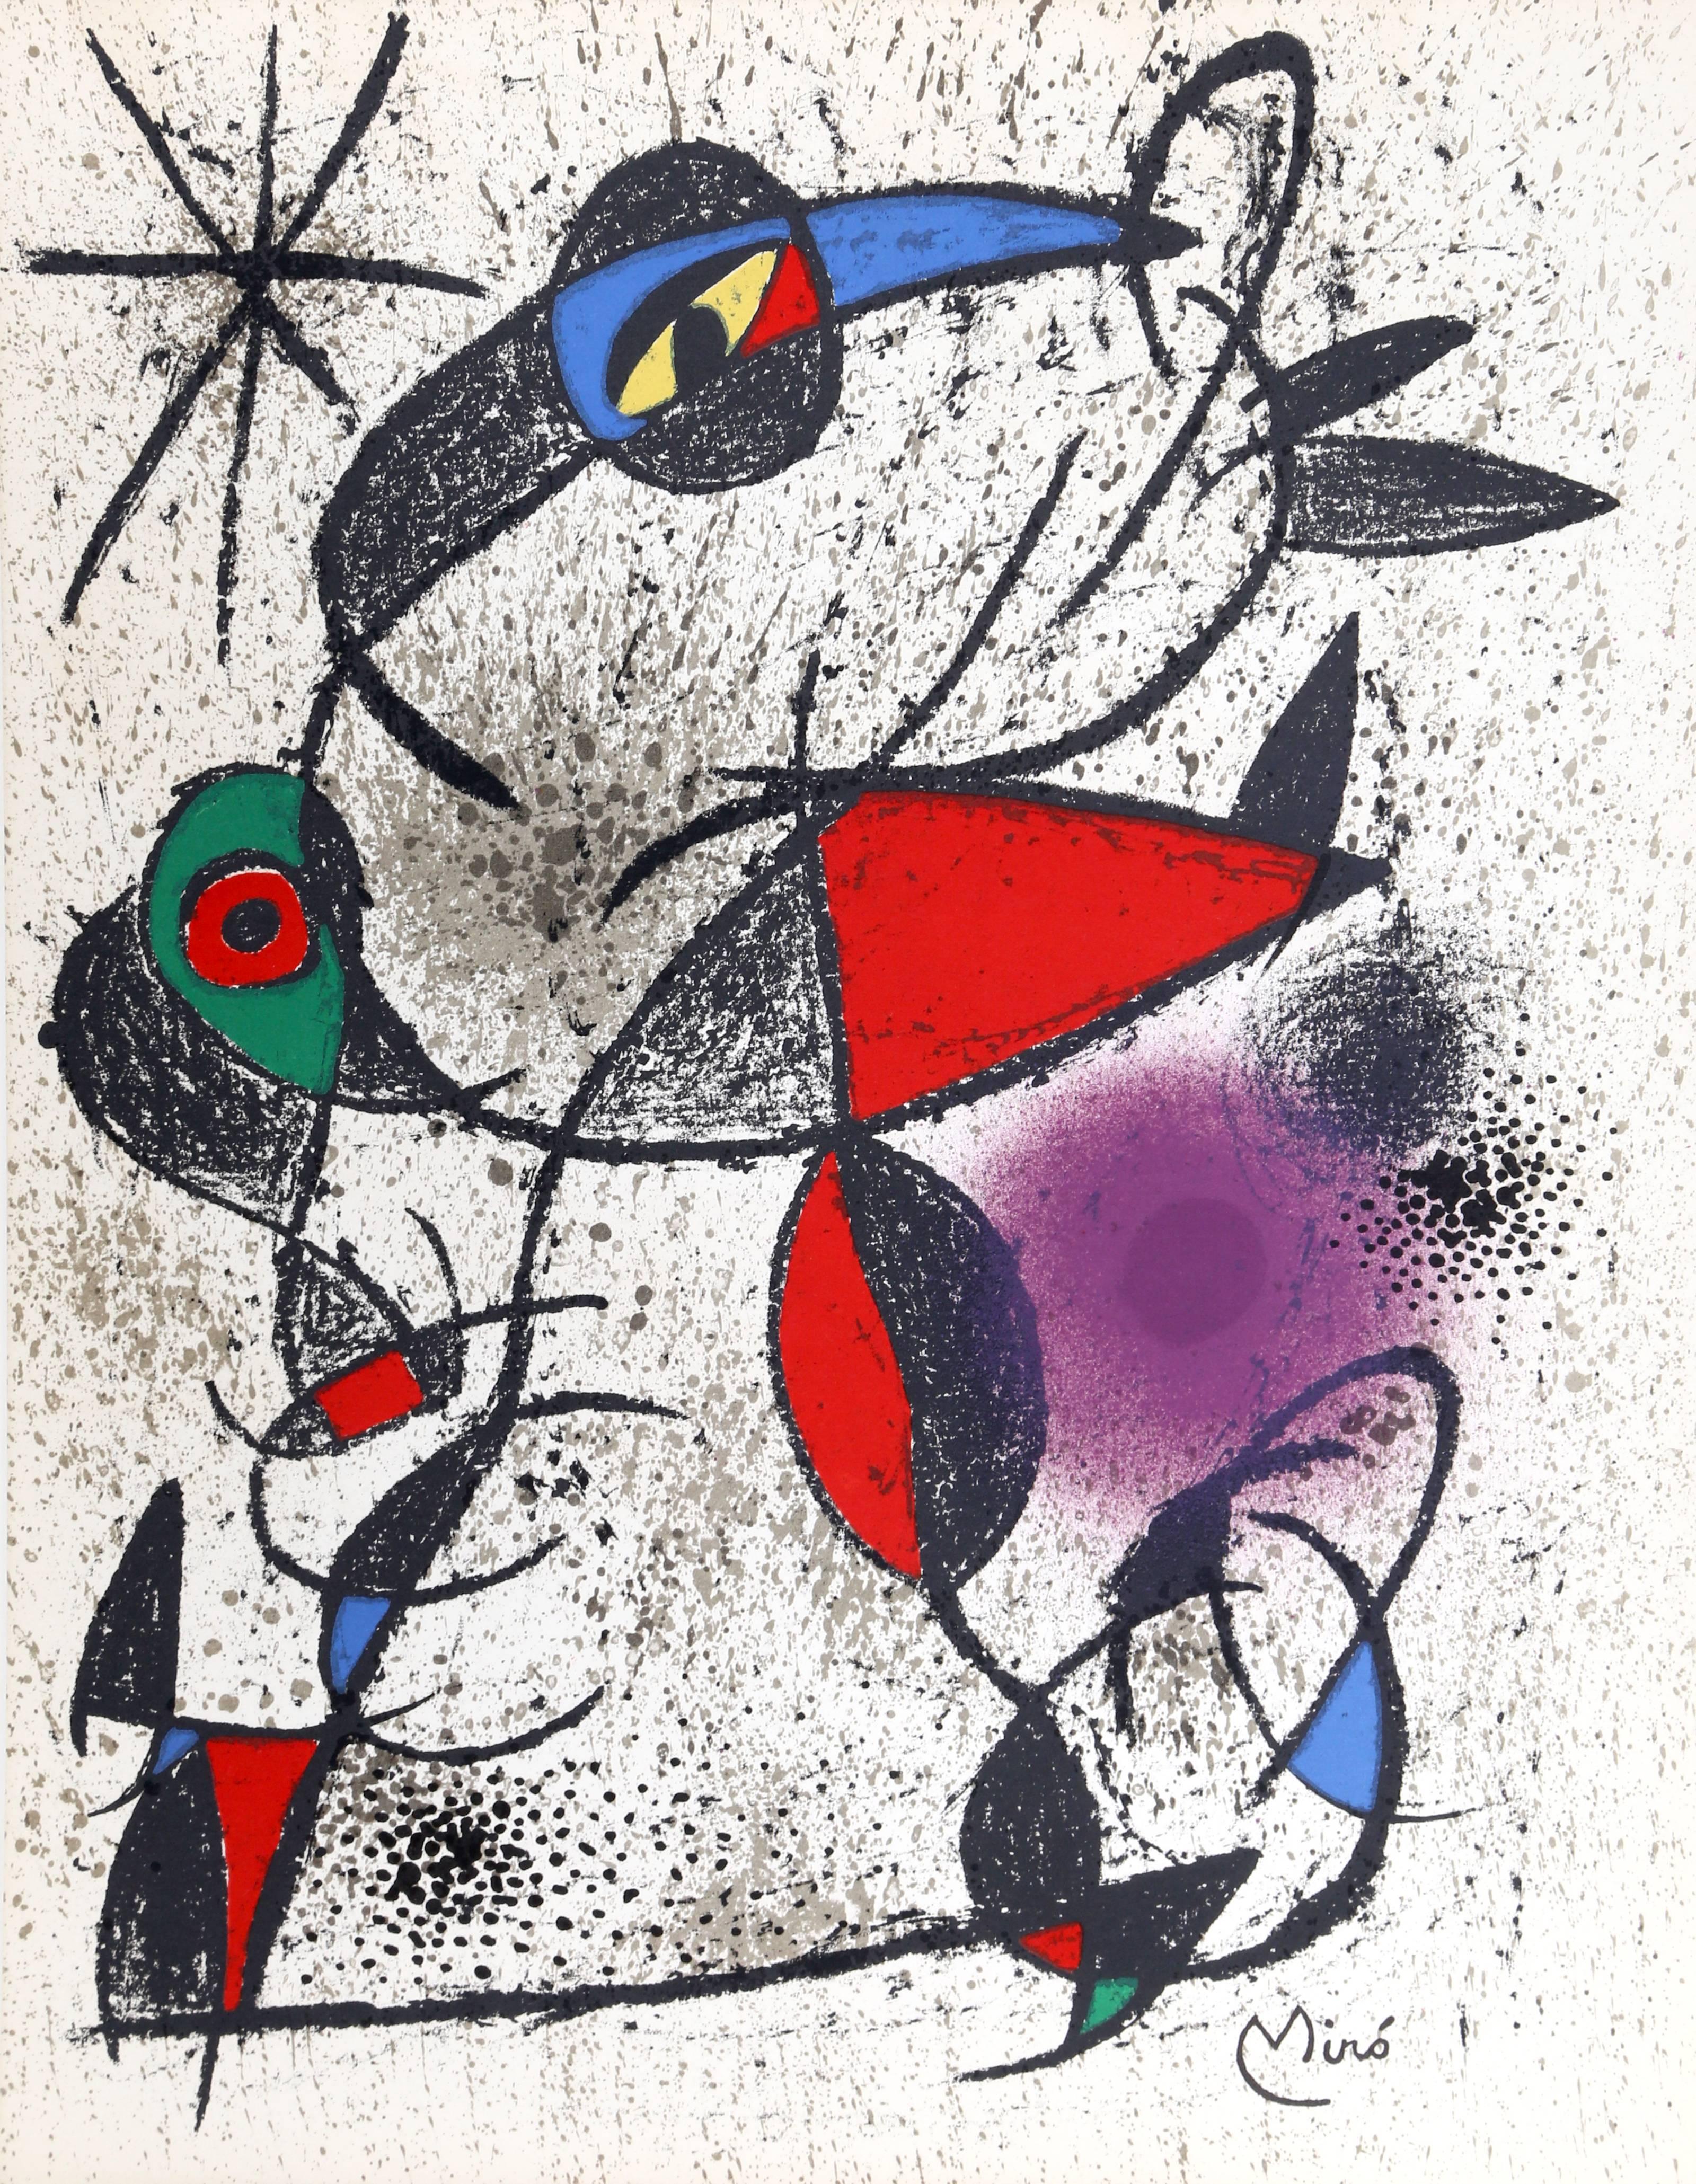 Jaillie du Calcaire from Souvenirs de Portraits d'Artistes by Joan Miro - Modern Print by Joan Miró